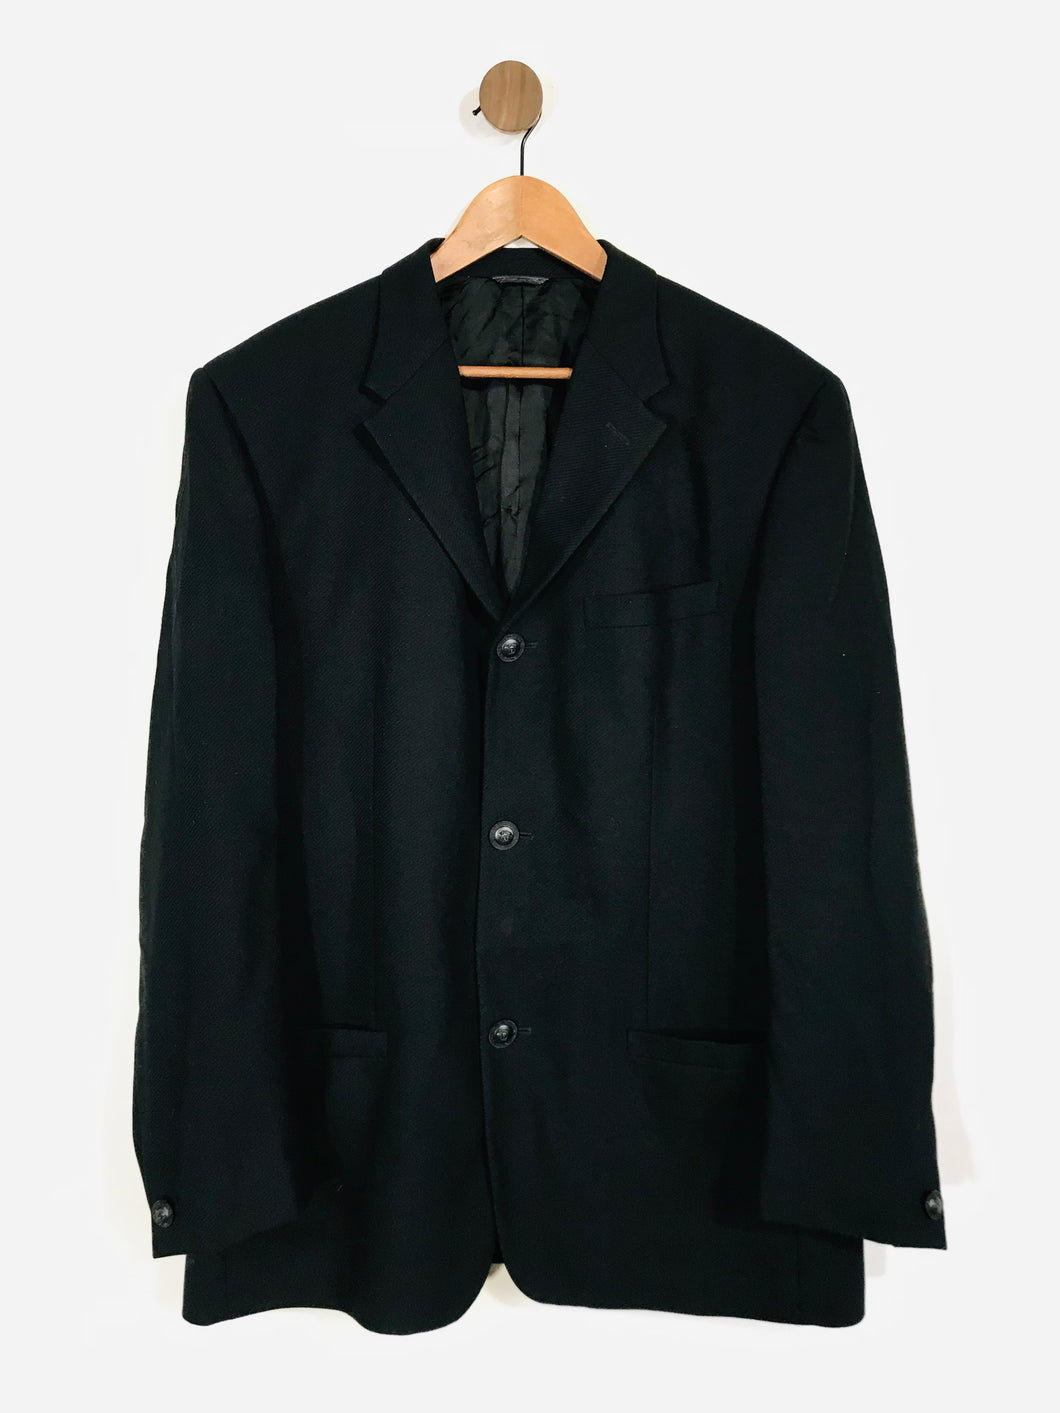 Gianni Versace Men's Wool Blazer Jacket | 54 | Black